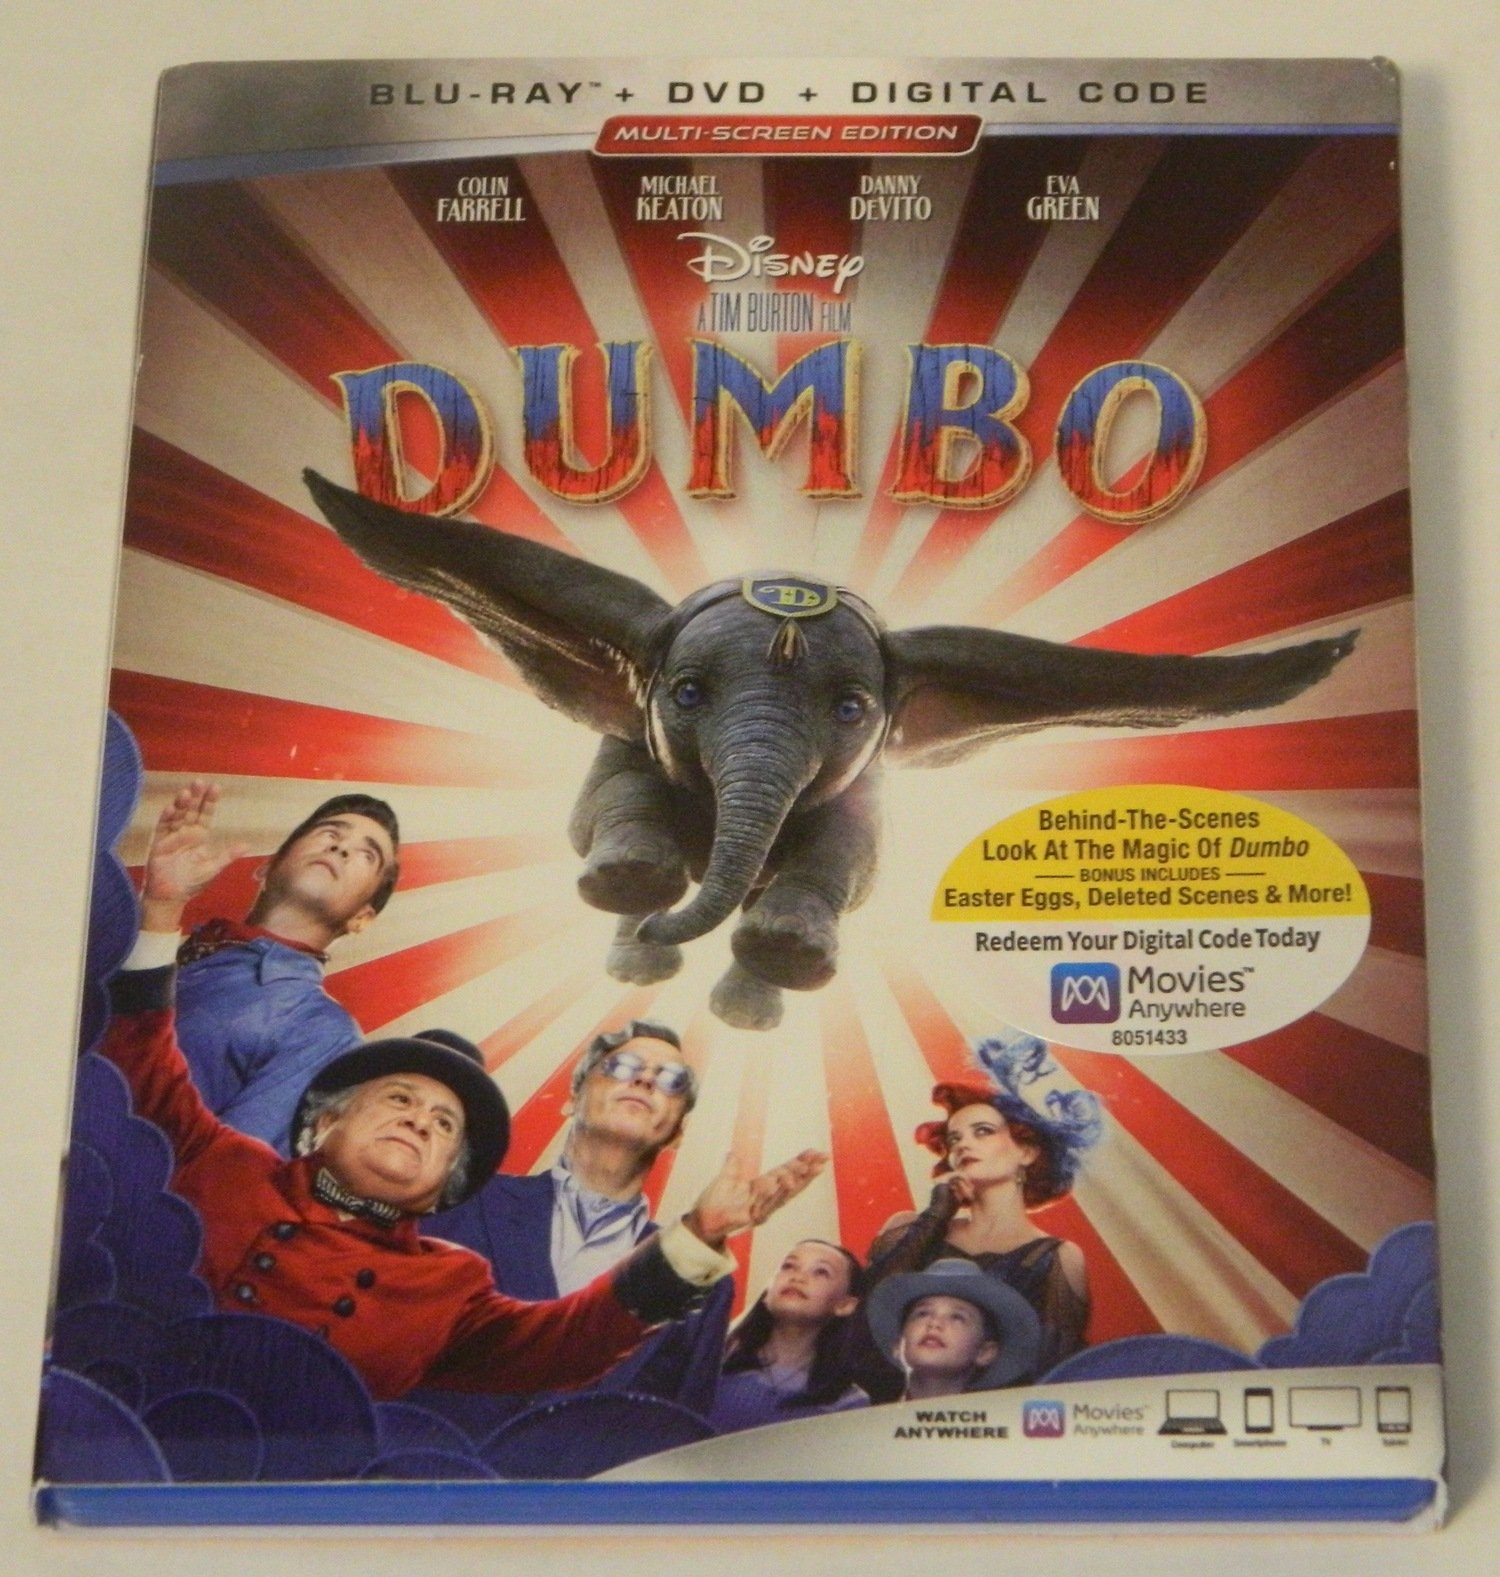 Dumbo (2019) Blu-ray Review